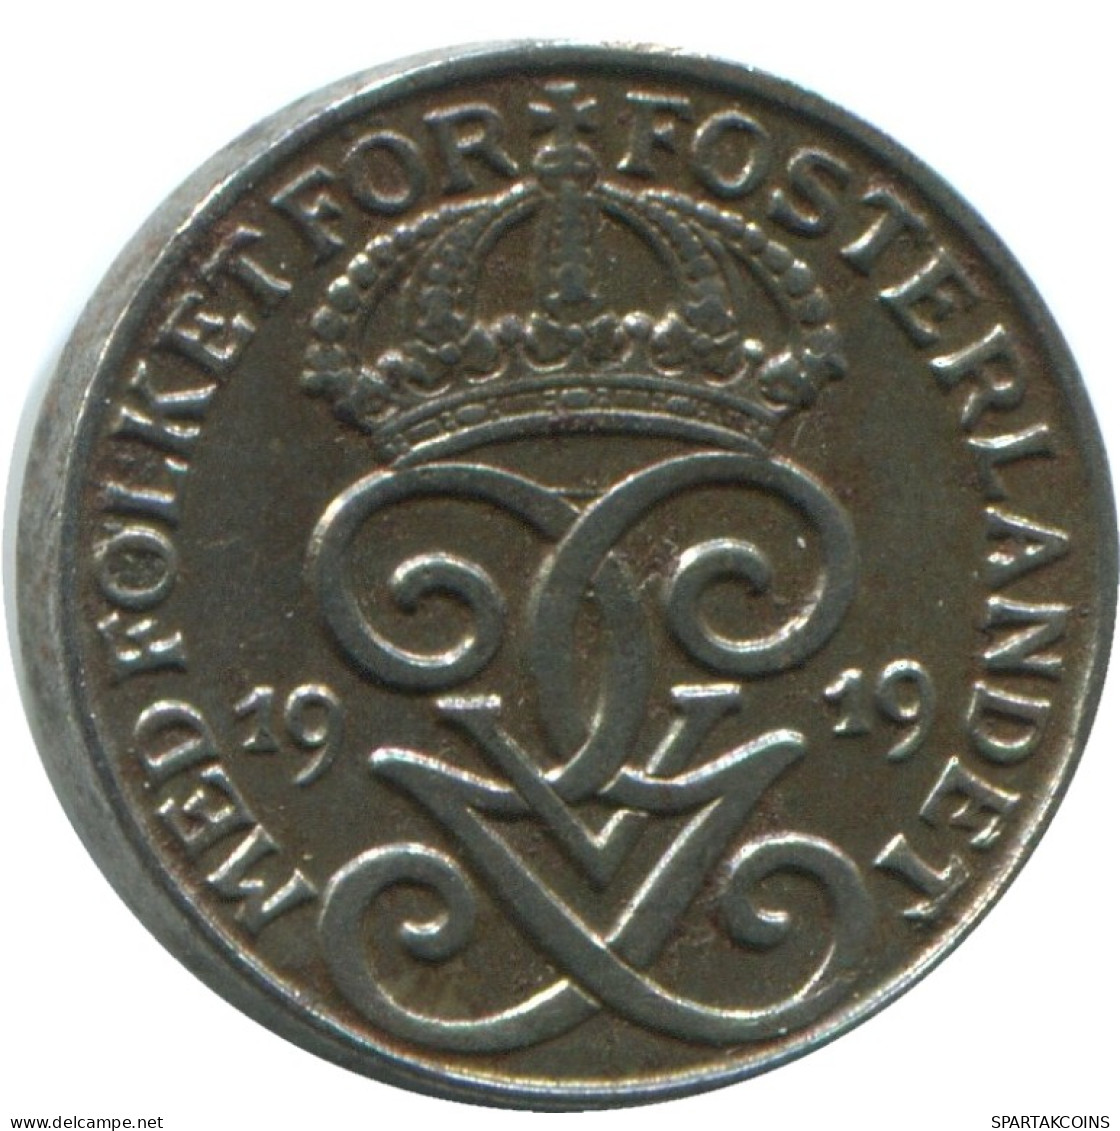 1 ORE 1919 SWEDEN Coin #AD189.2.U.A - Sweden